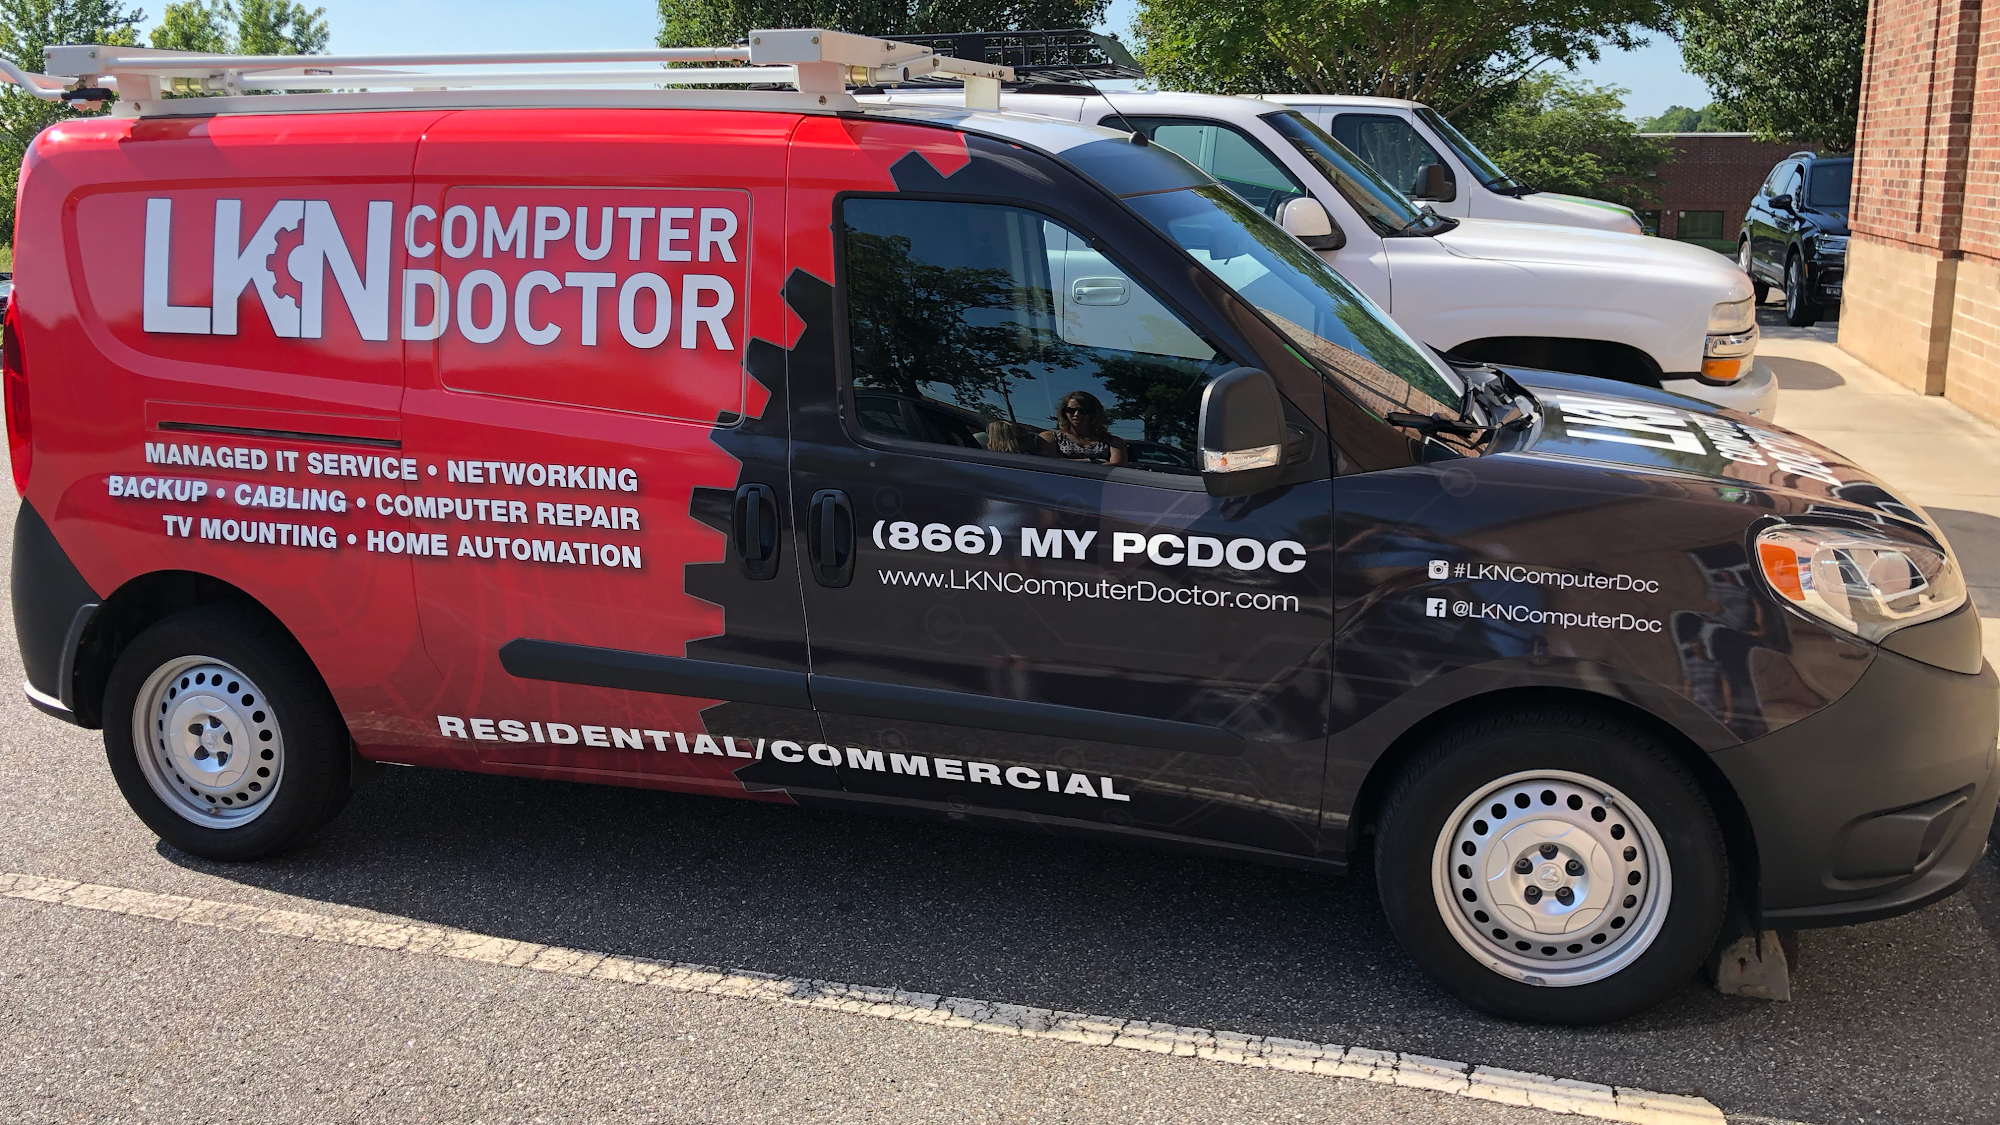 Lake Norman Computer Doctor